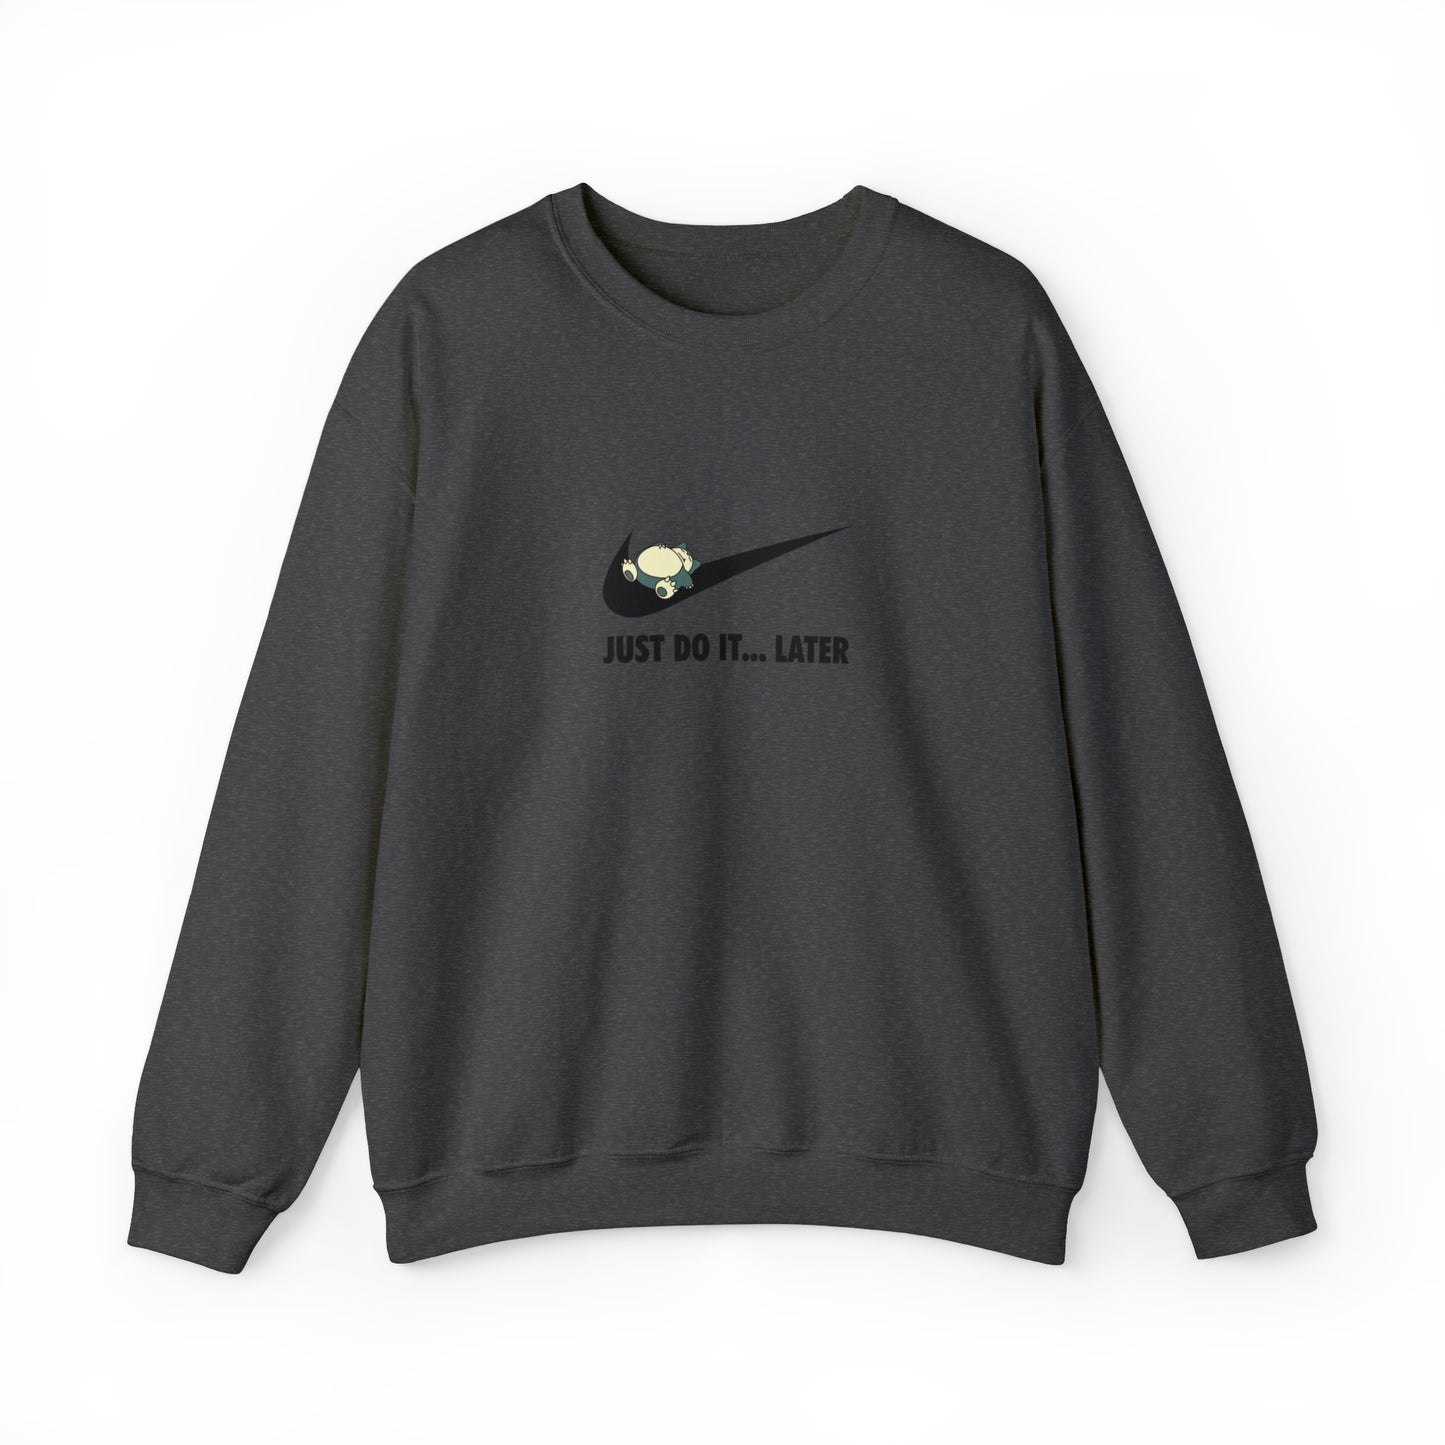 Custom Parody Crewneck Sweatshirt, Just do it later Nike Design